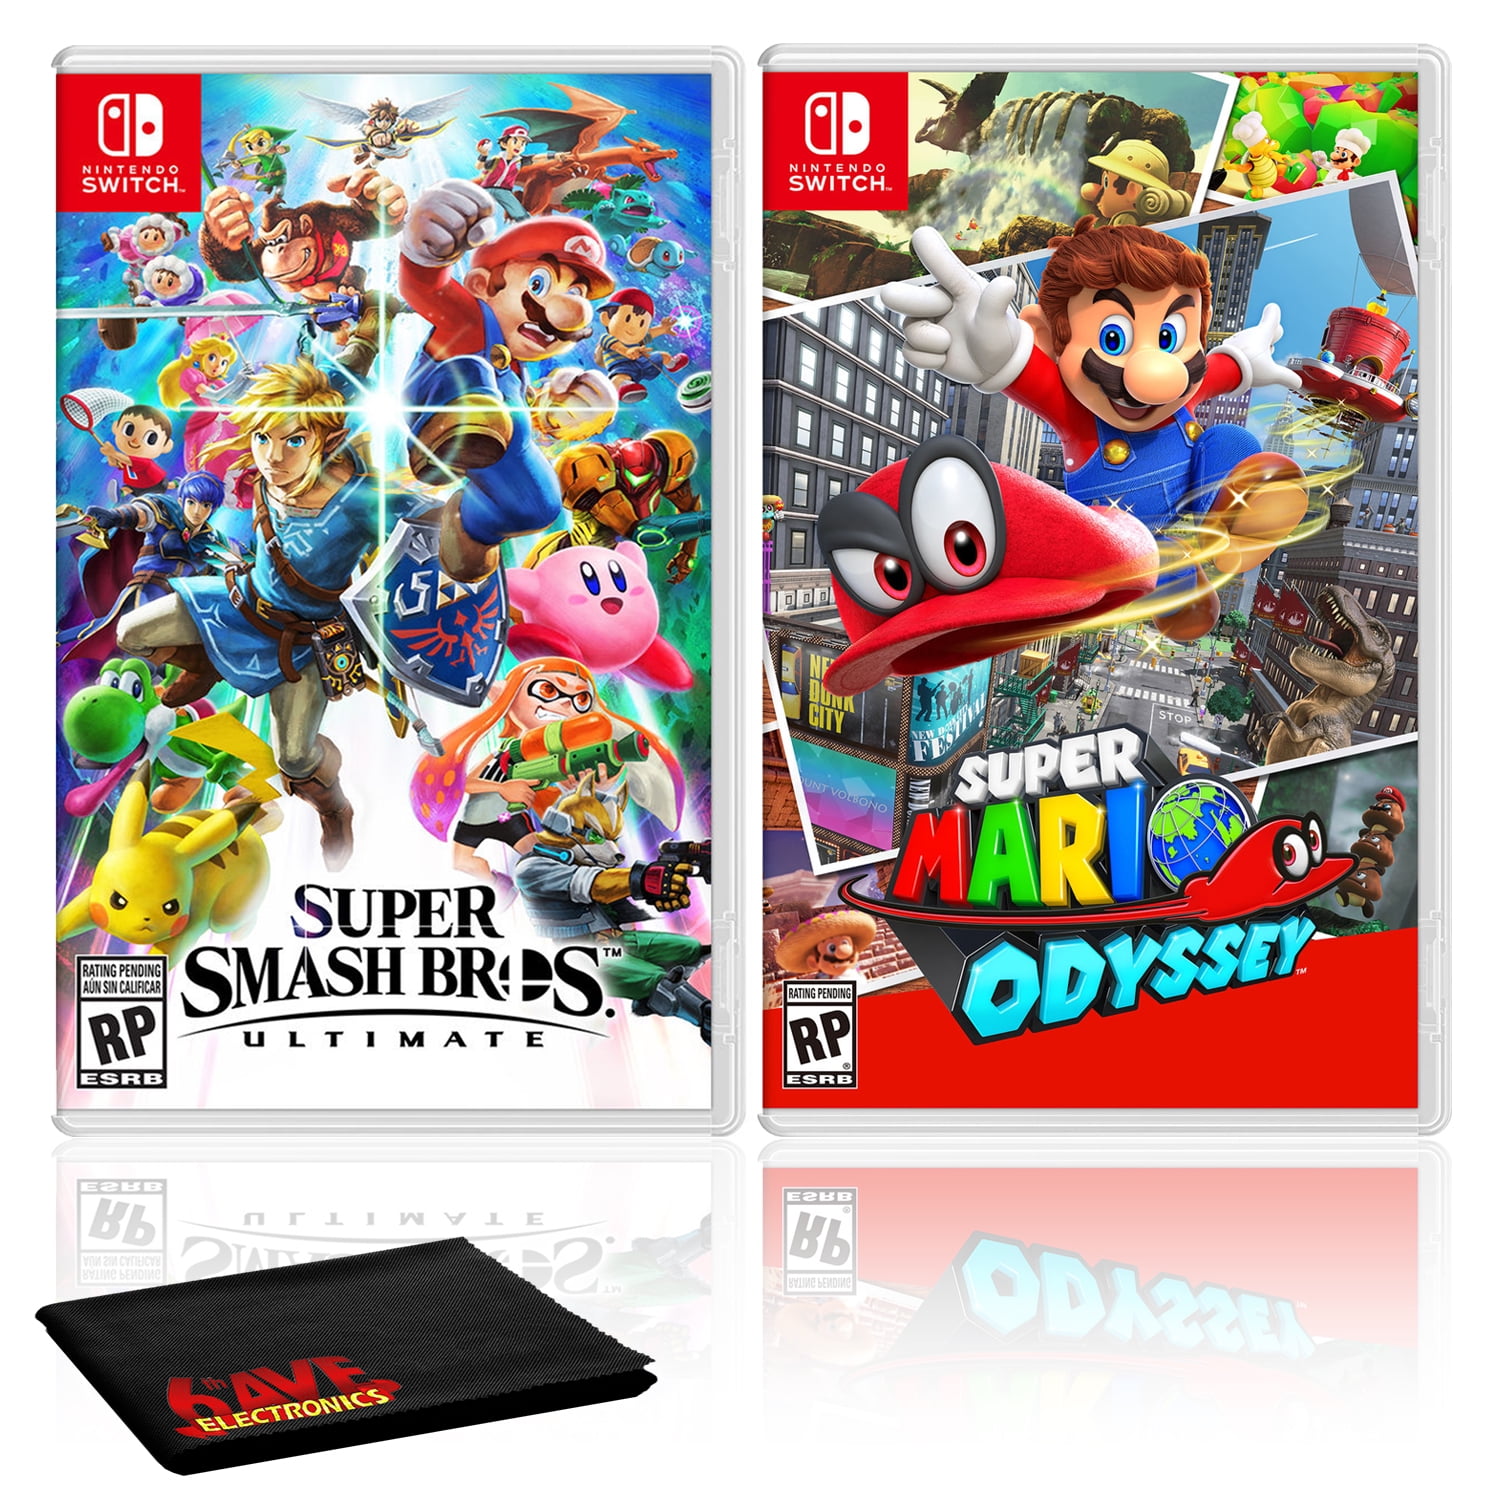 Super Smash Bros. Ultimate with Super Mario Odyssey, Nintendo Switch, HACPAAABA-018